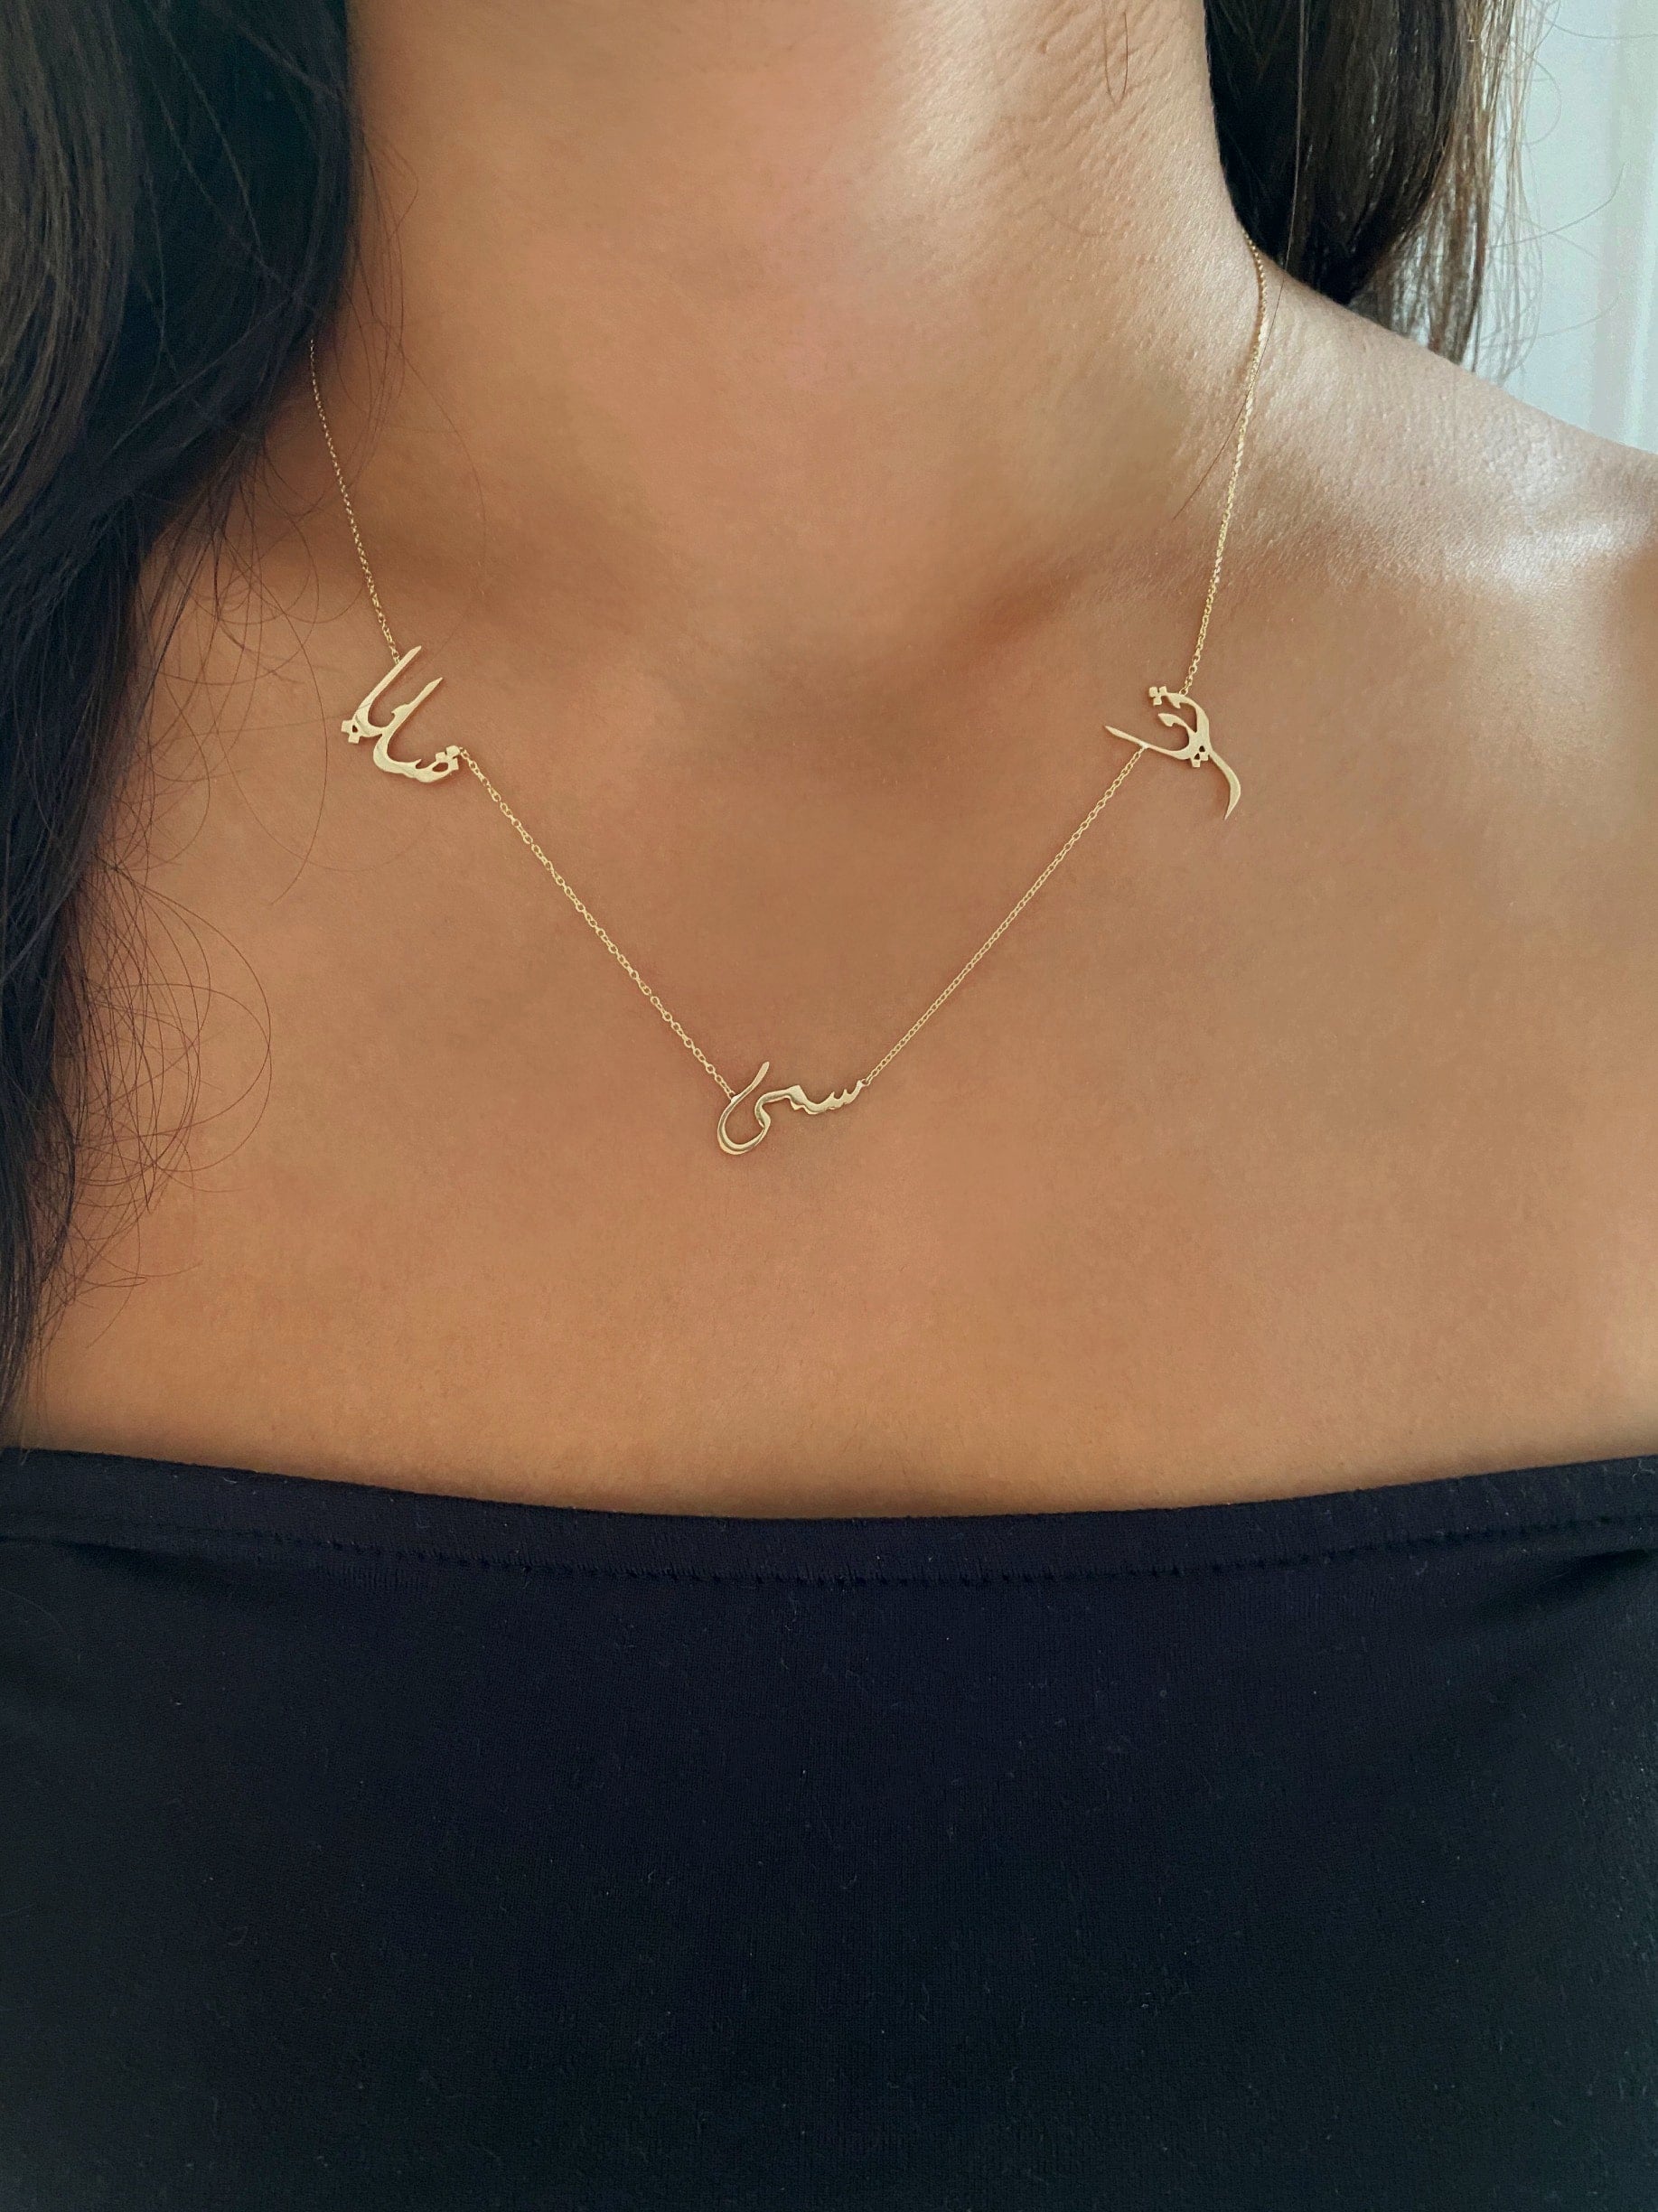 Buy customized Arabic Name Necklace in Dubai